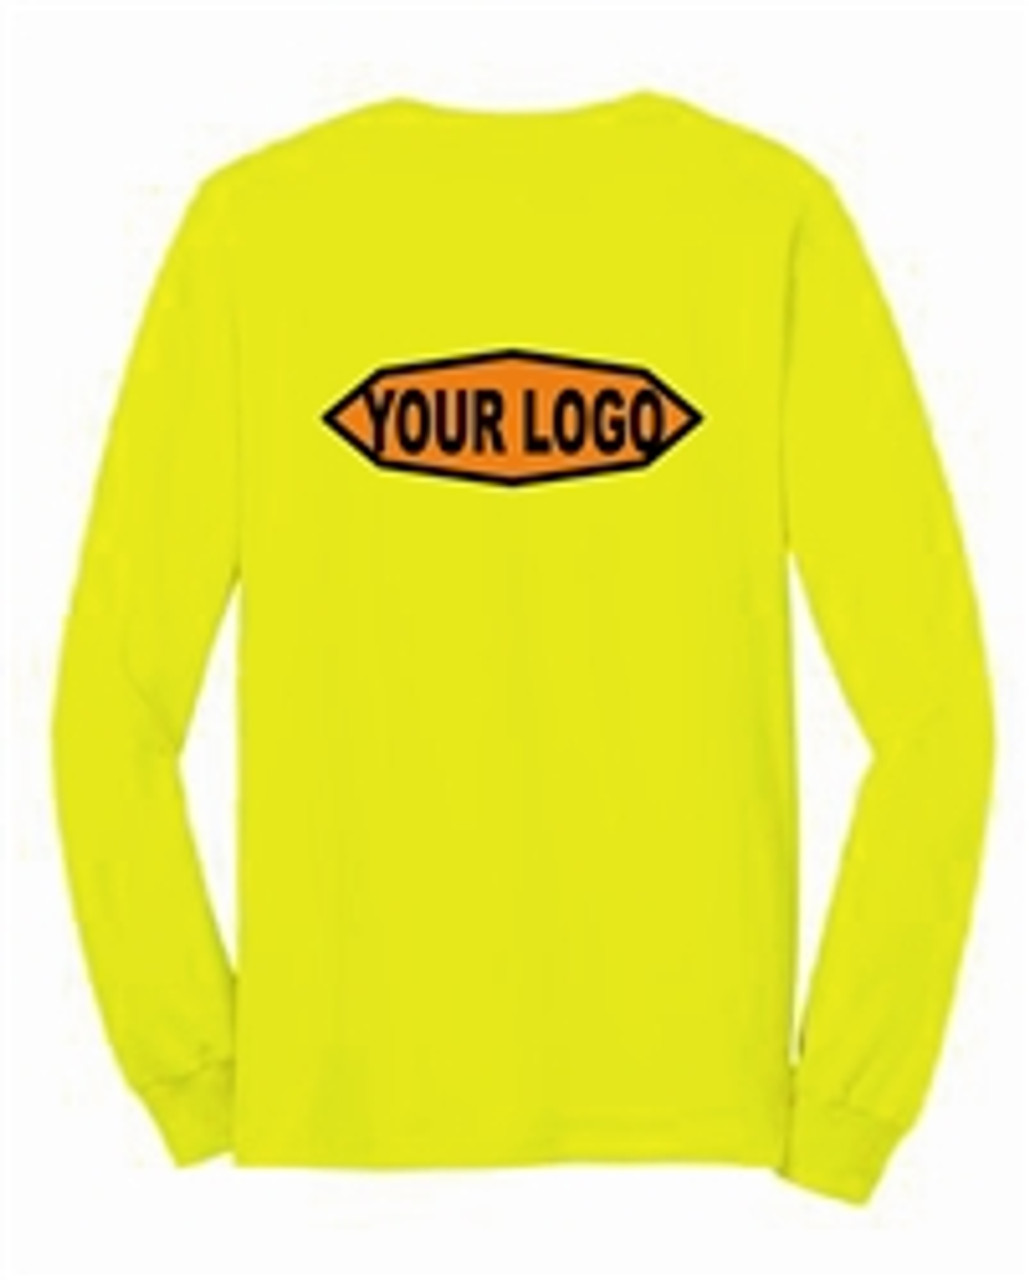 Lime Green Long Sleeve T-Shirt USA - 50/50 Cotton/Poly (Preshrunk) *Custom Printing Available*